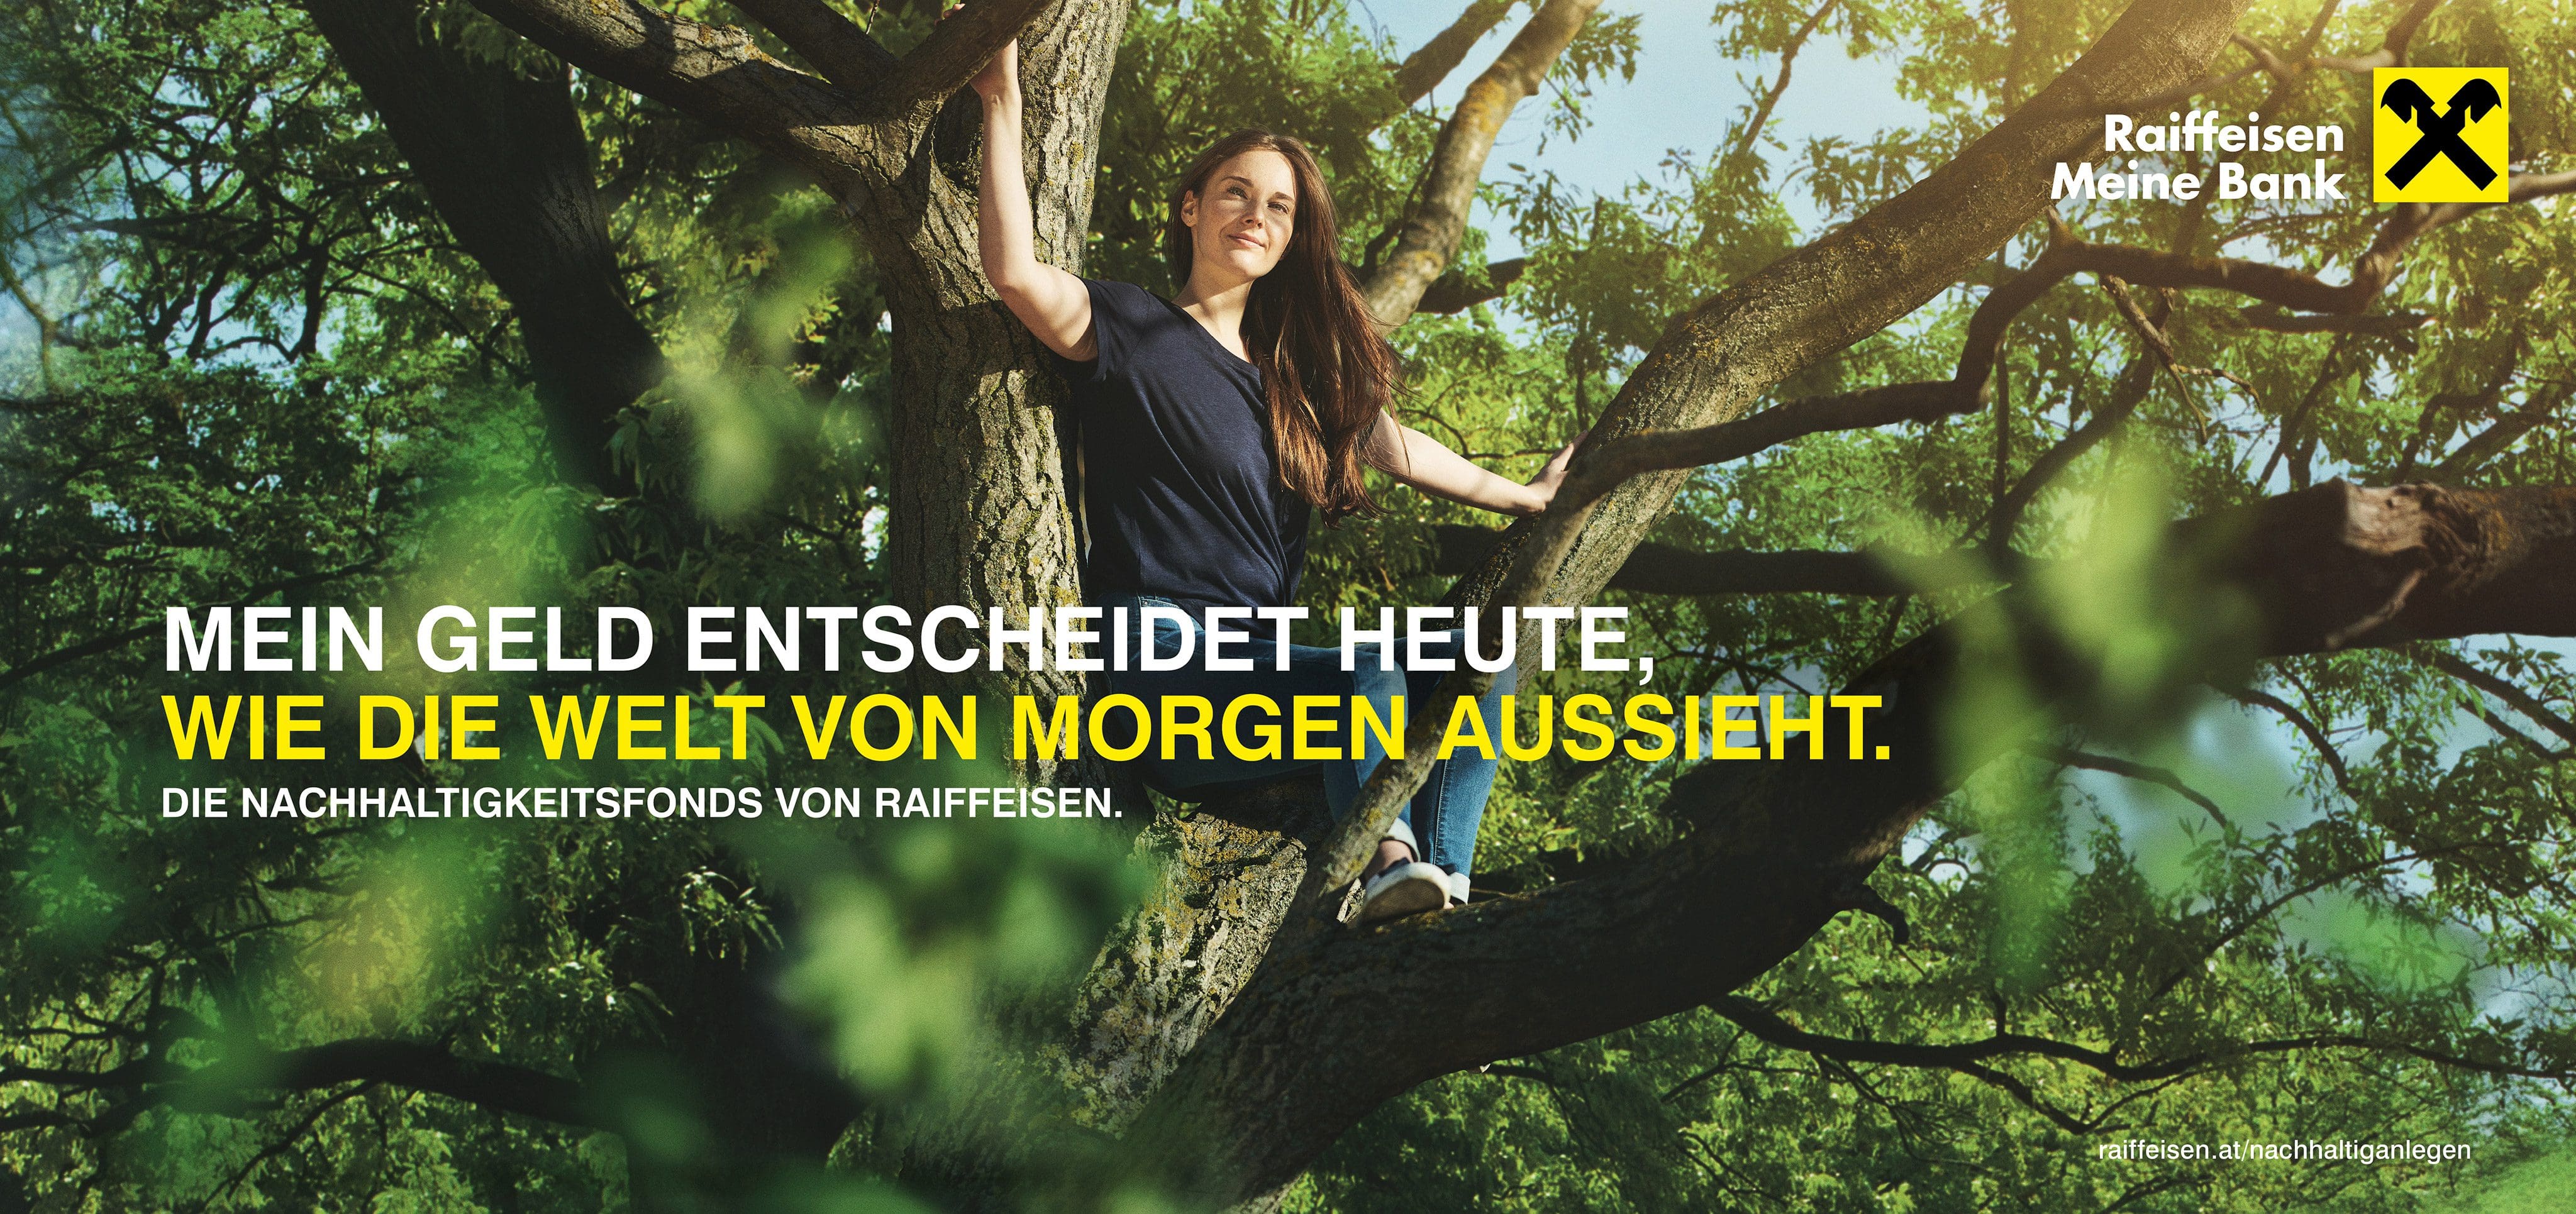 RAIFFEISEN_Nachhaltigkeitskampagne  //  AGENCY_Ogilvy & Mather